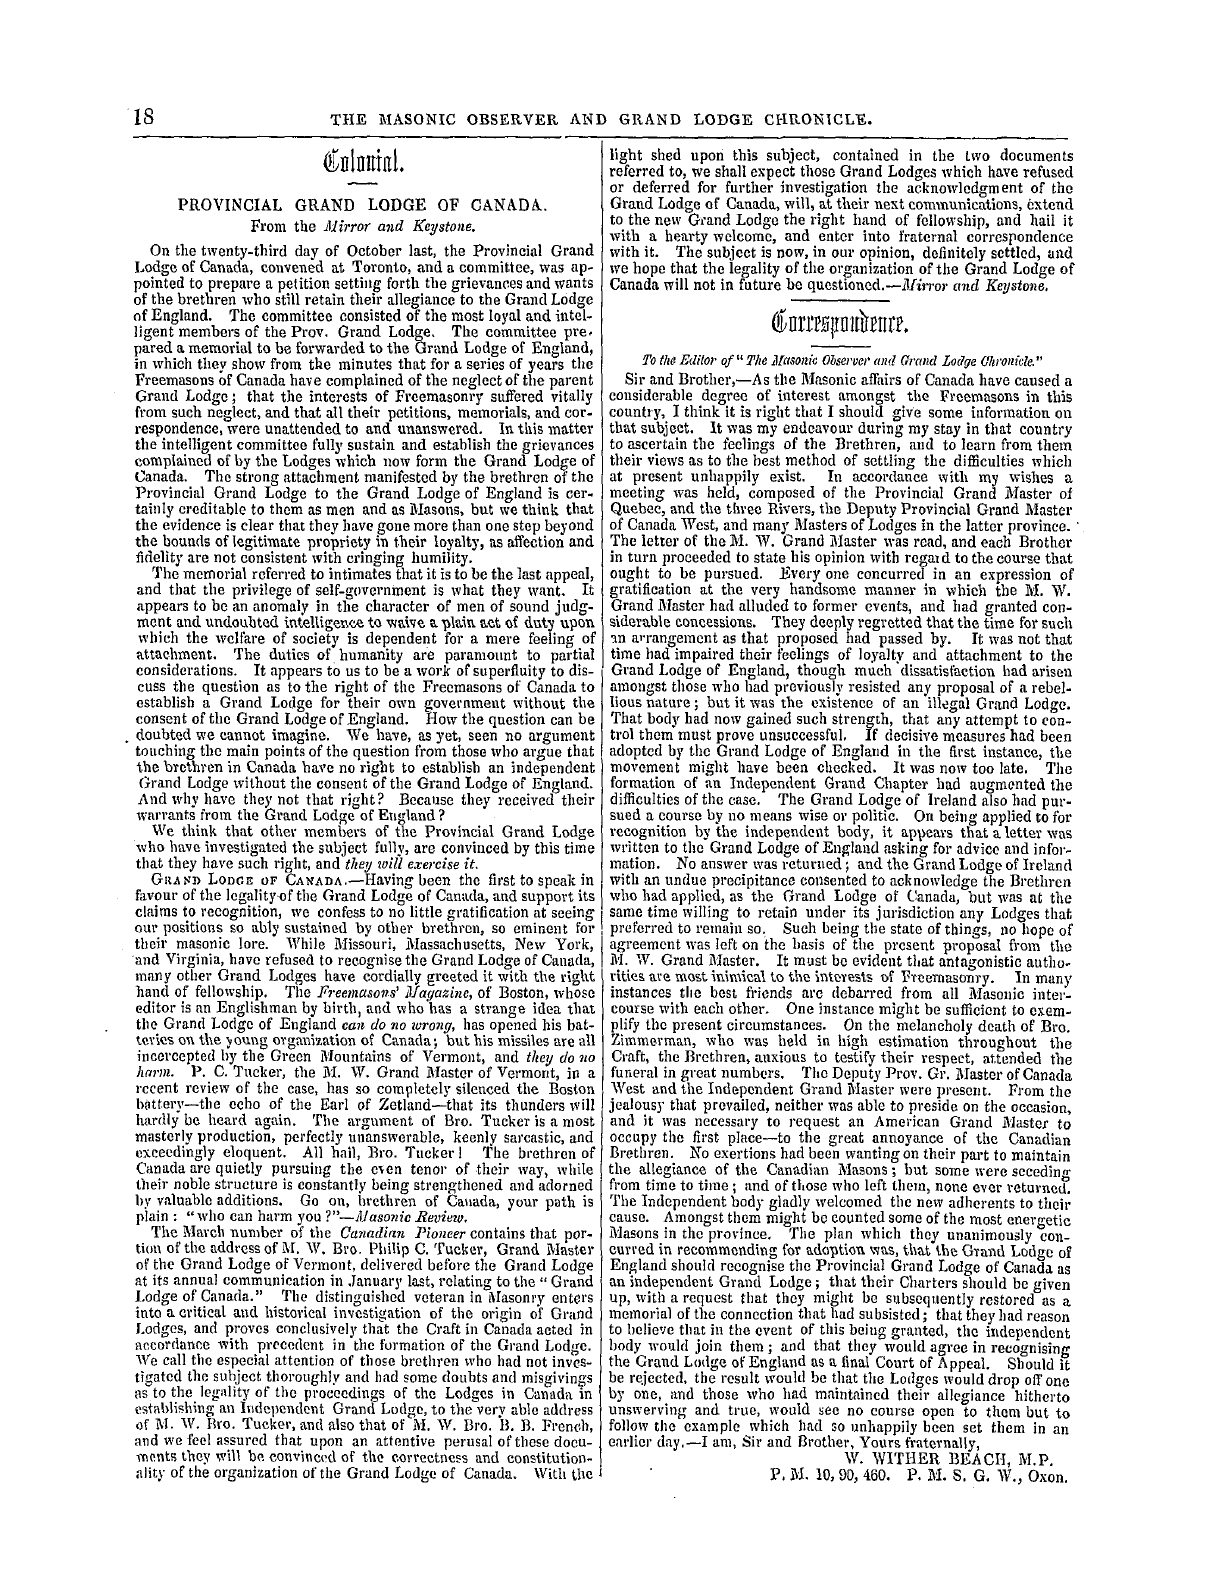 The Masonic Observer: 1857-06-20: 18